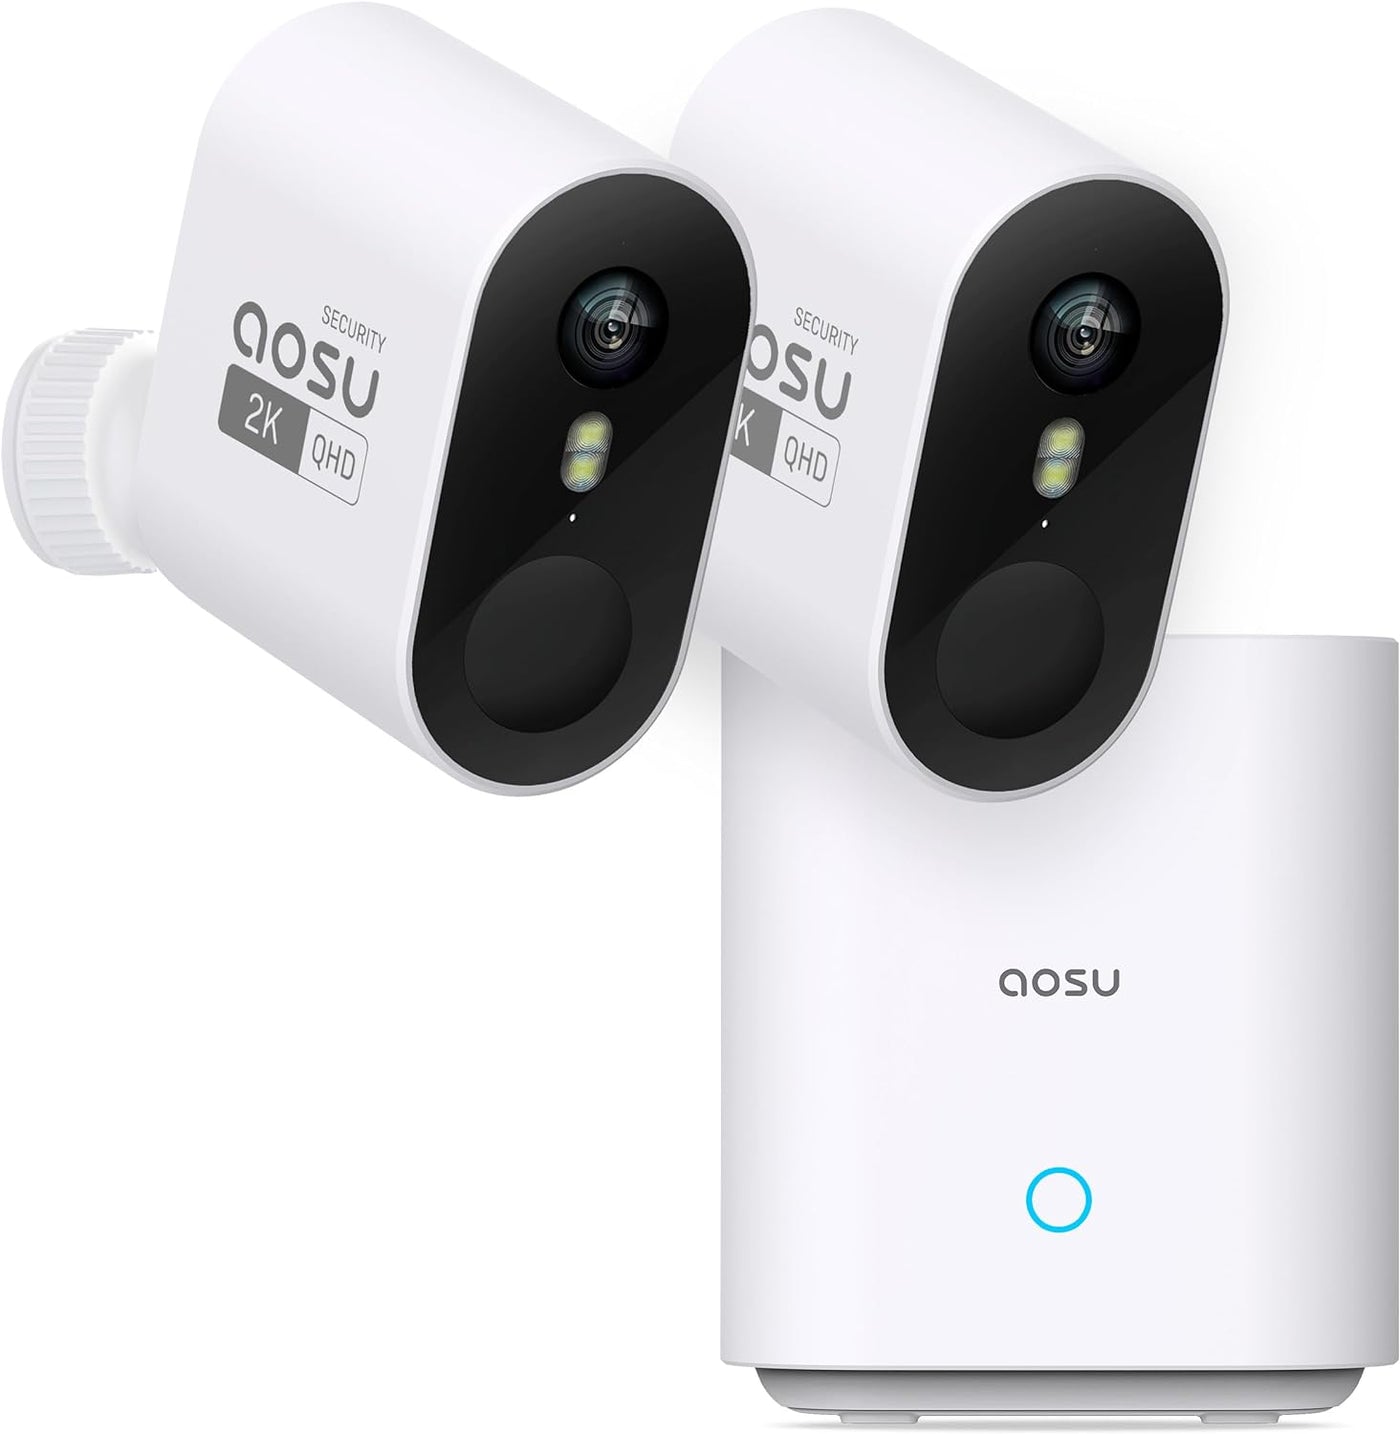 AOSU Security Cameras Wireless Outdoor Home System - $107